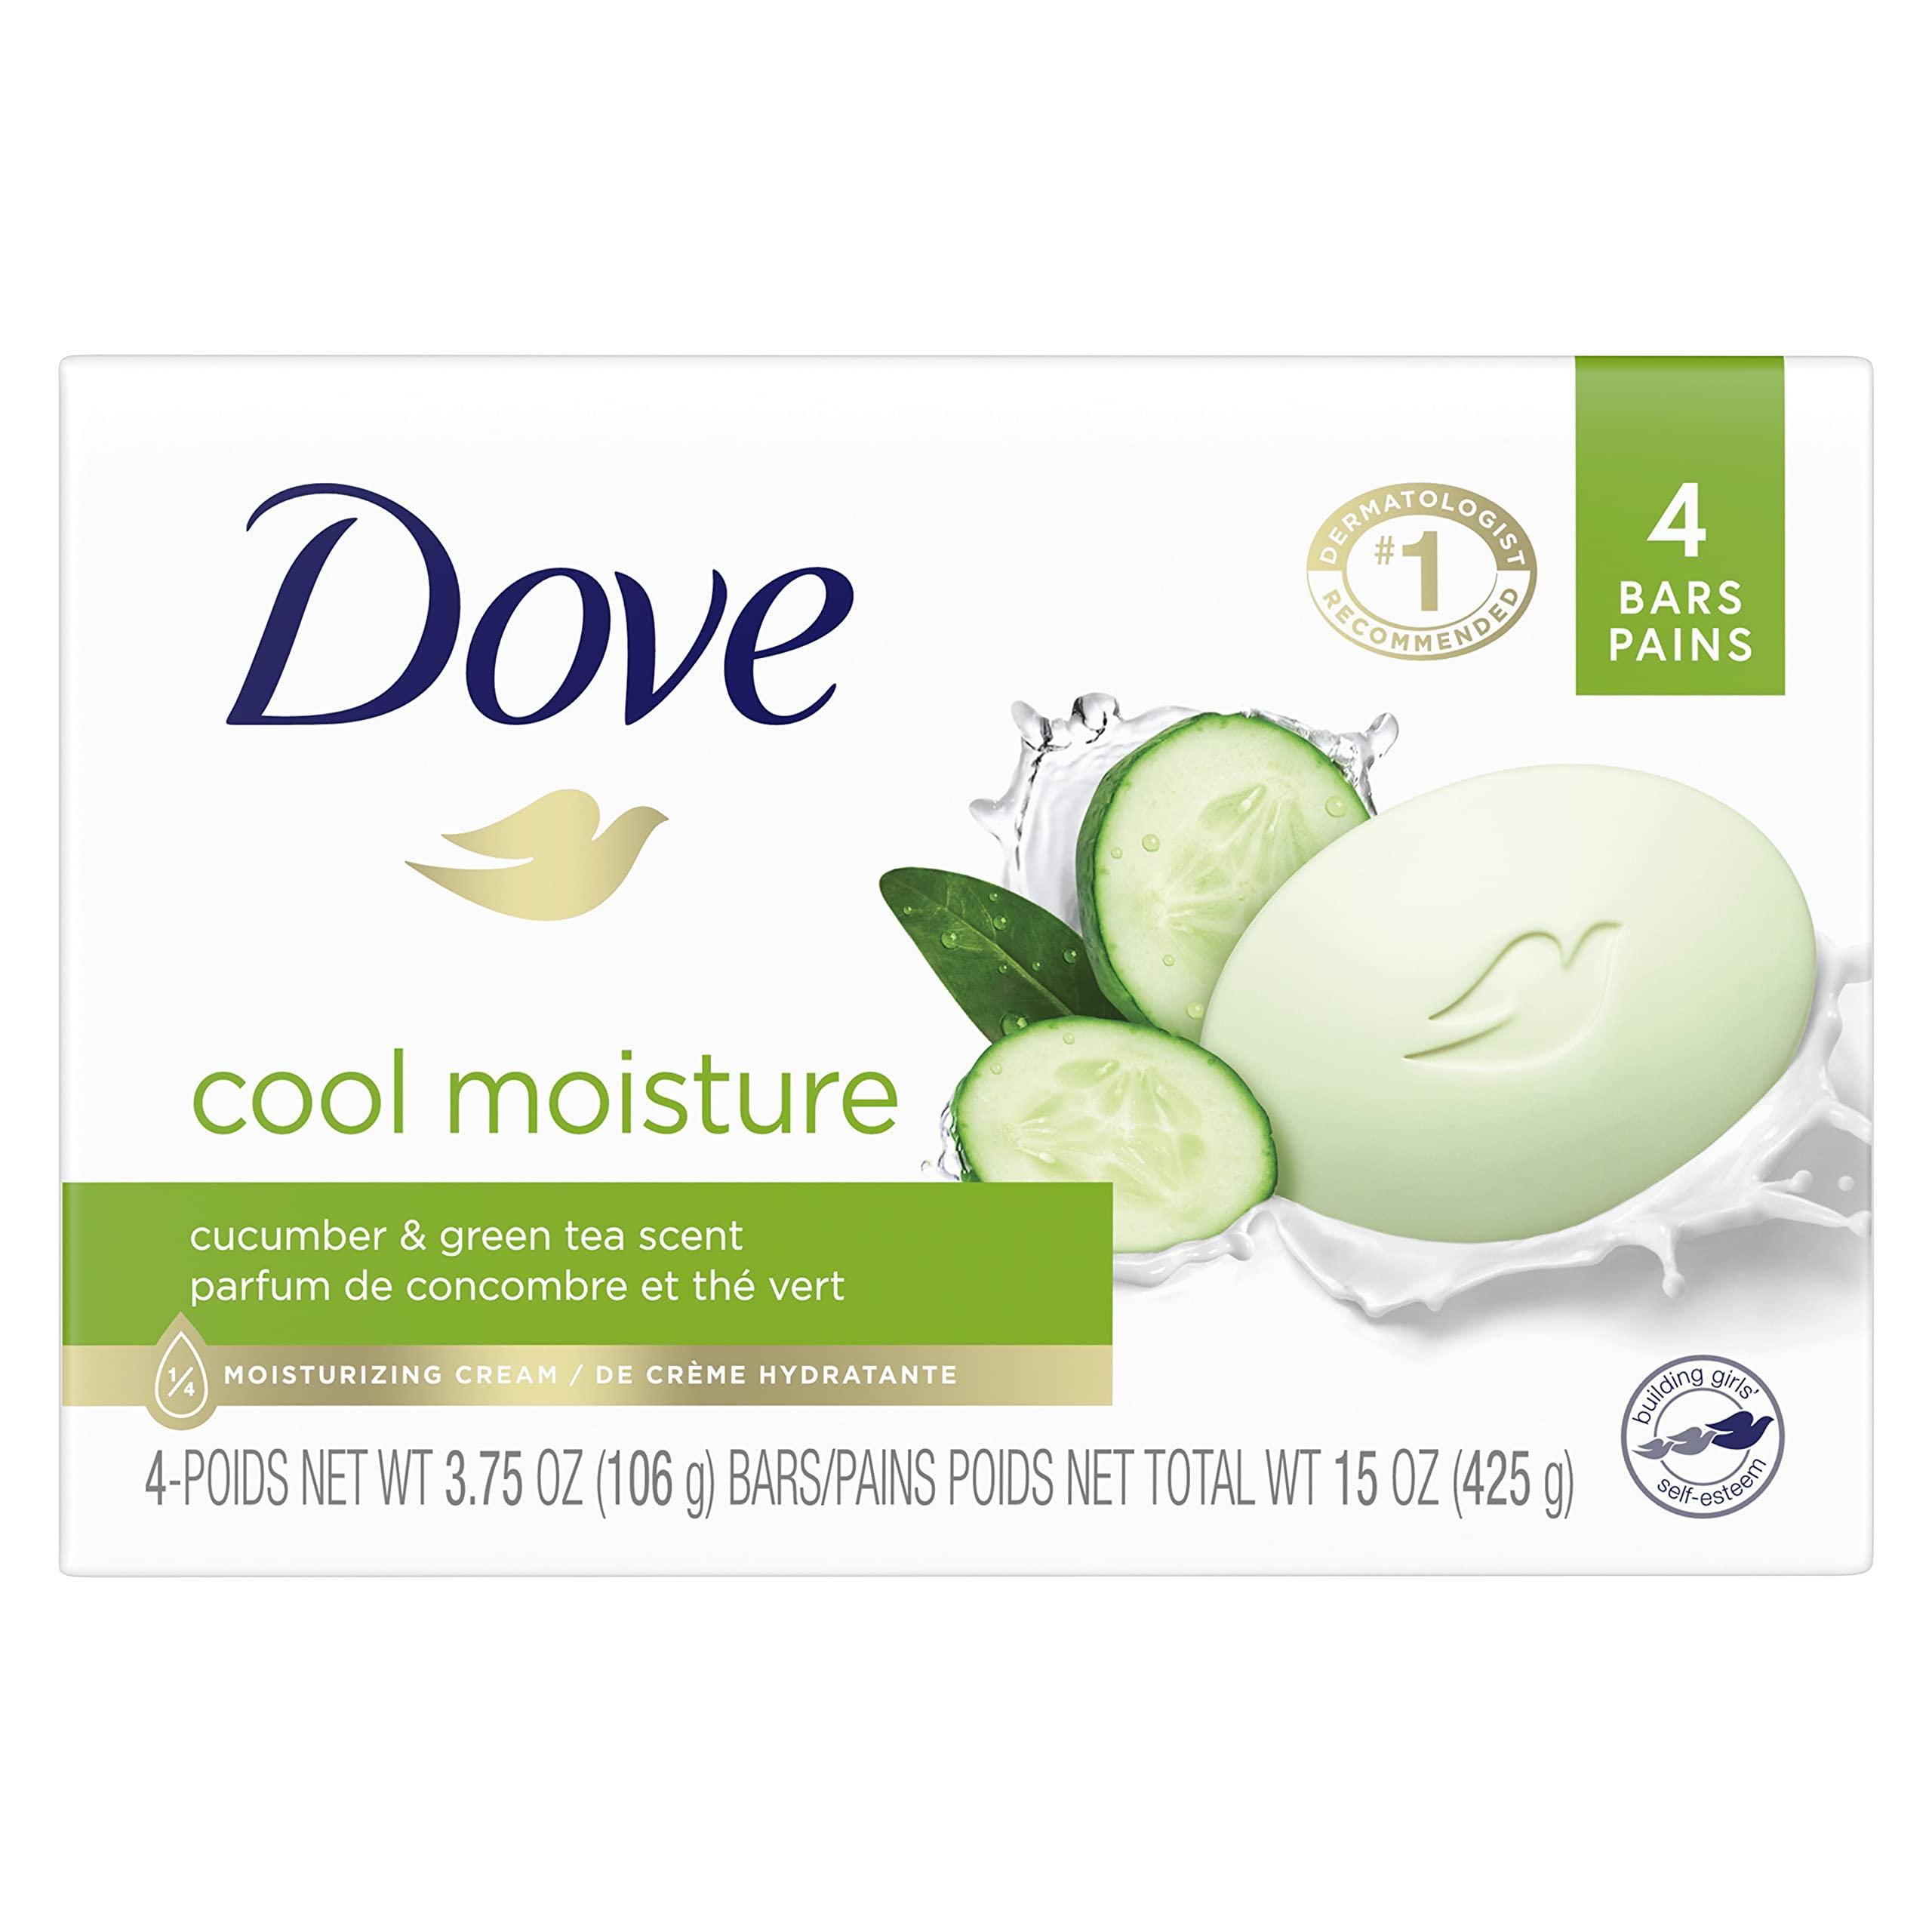 Dove Go Fresh Cool Moisture Beauty Bar with Cucumber & Green Tea Scent - 4 x 4 oz